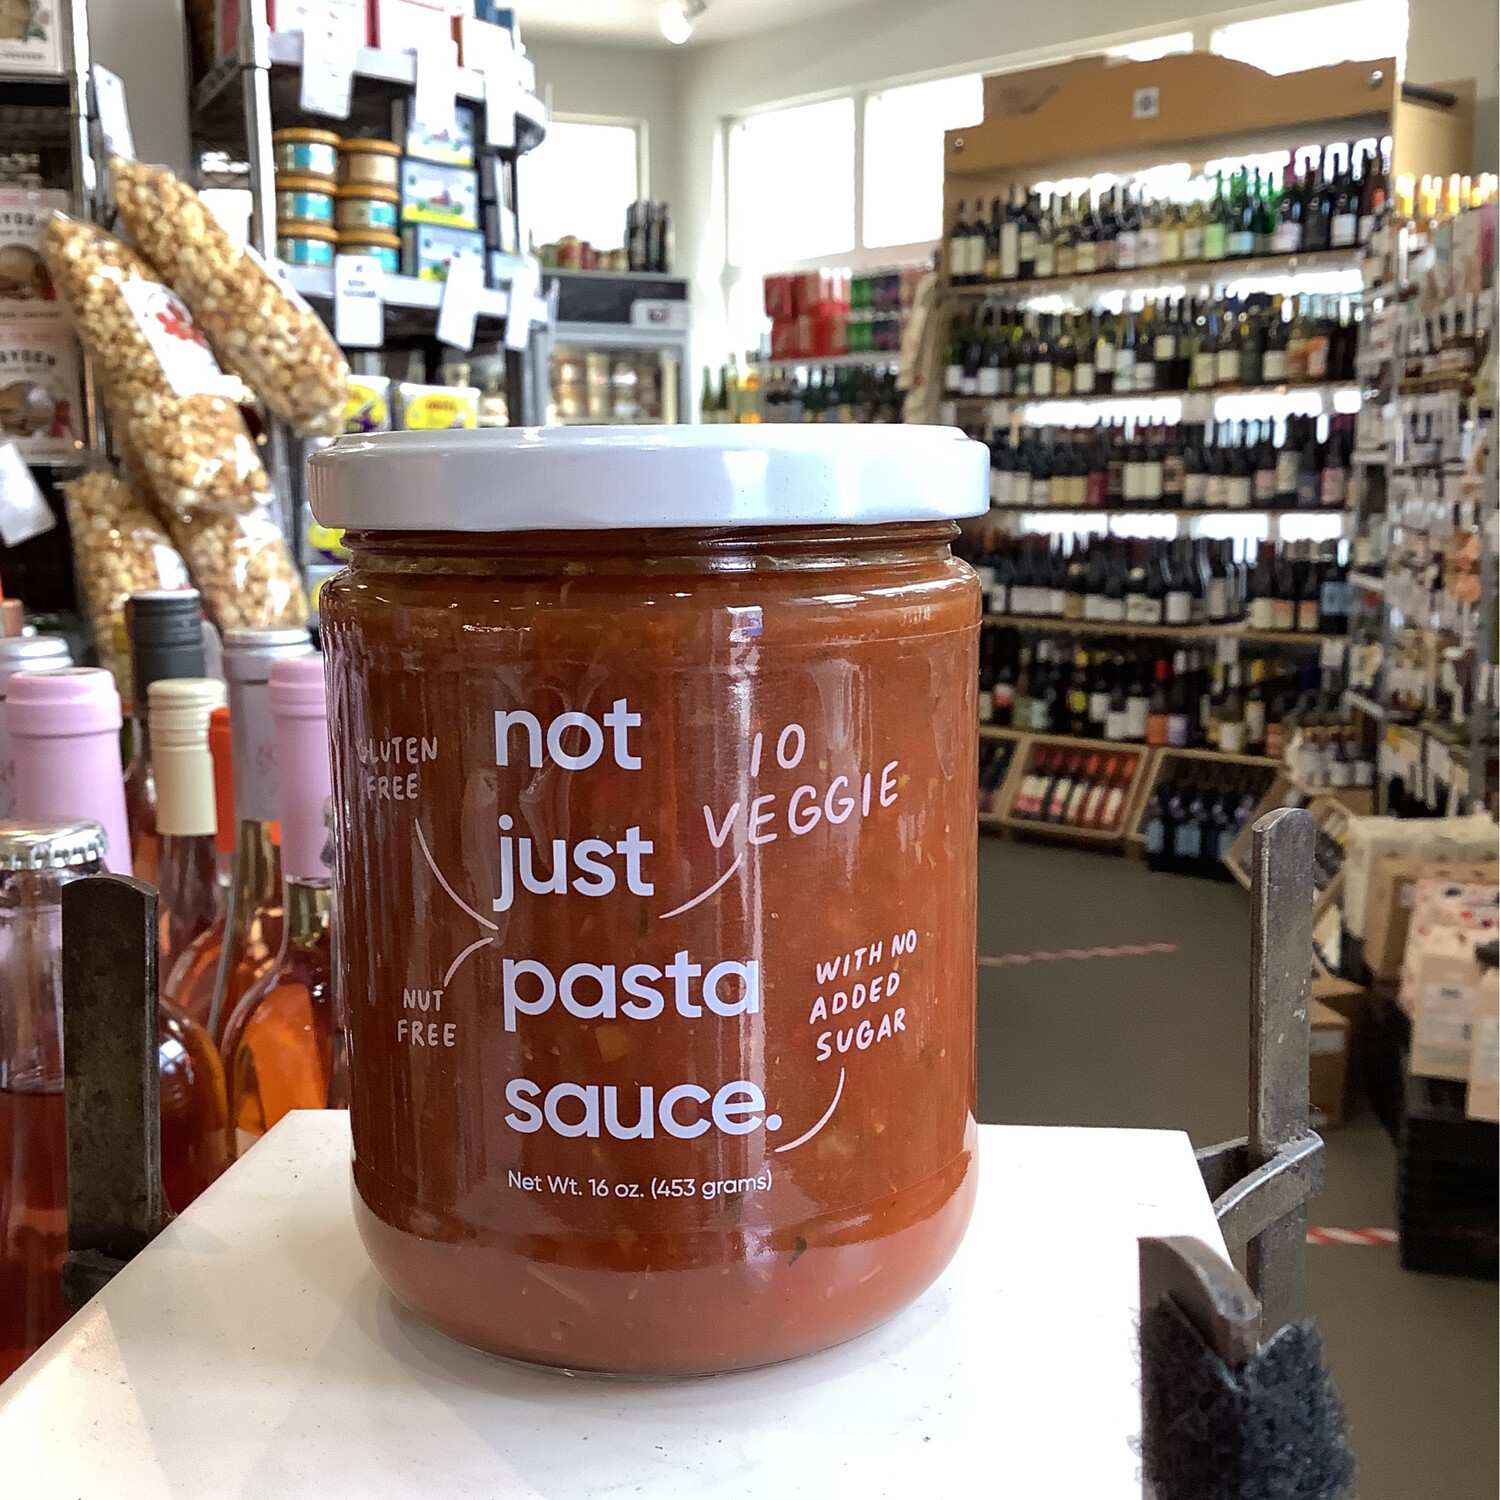 Not Just Pasta Sauce